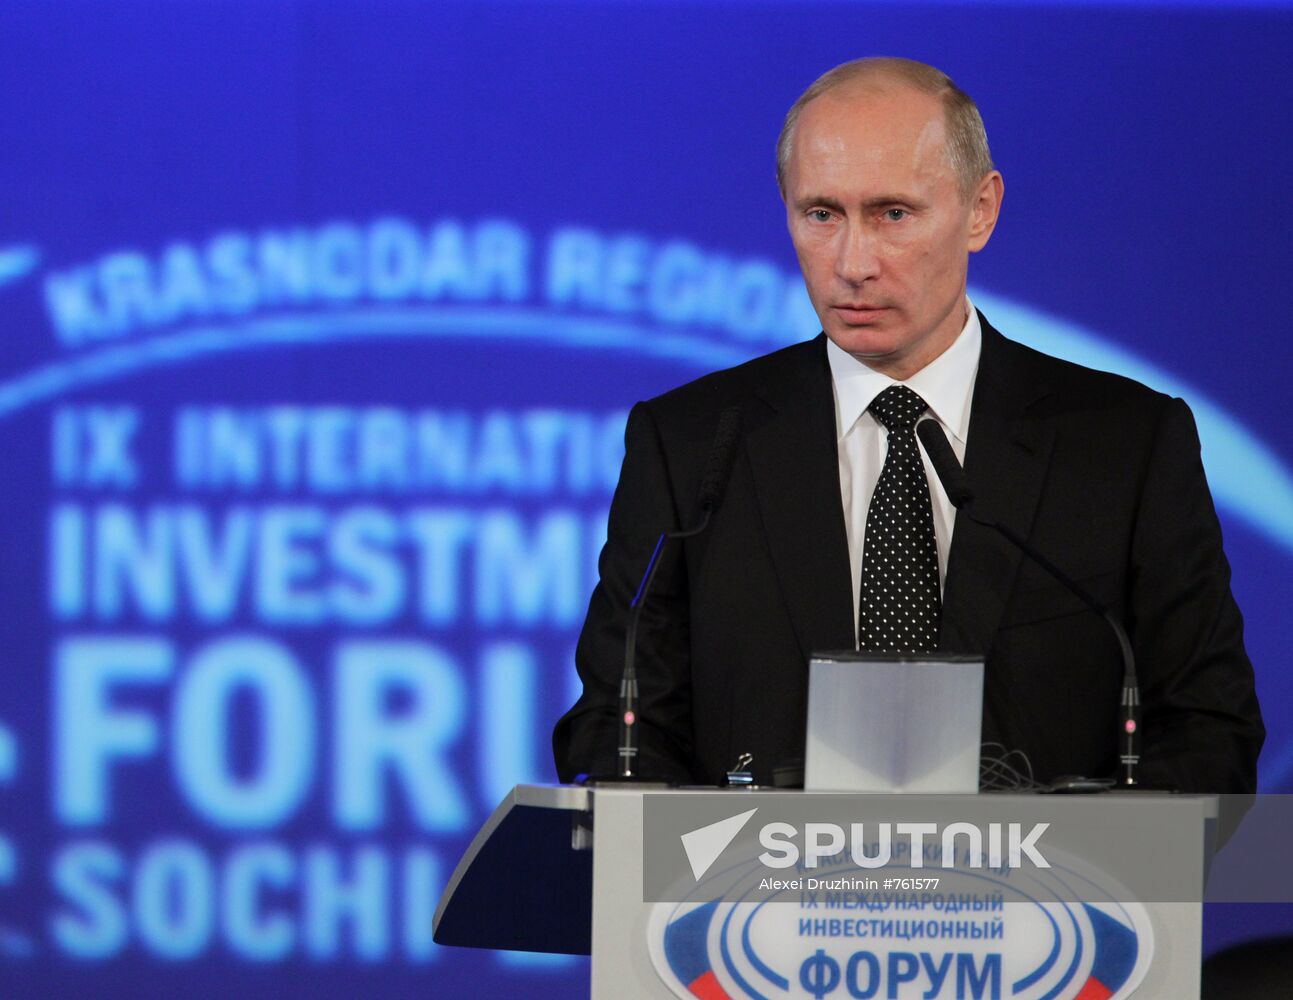 Vladimir Putin attends 9th International Investment Forum